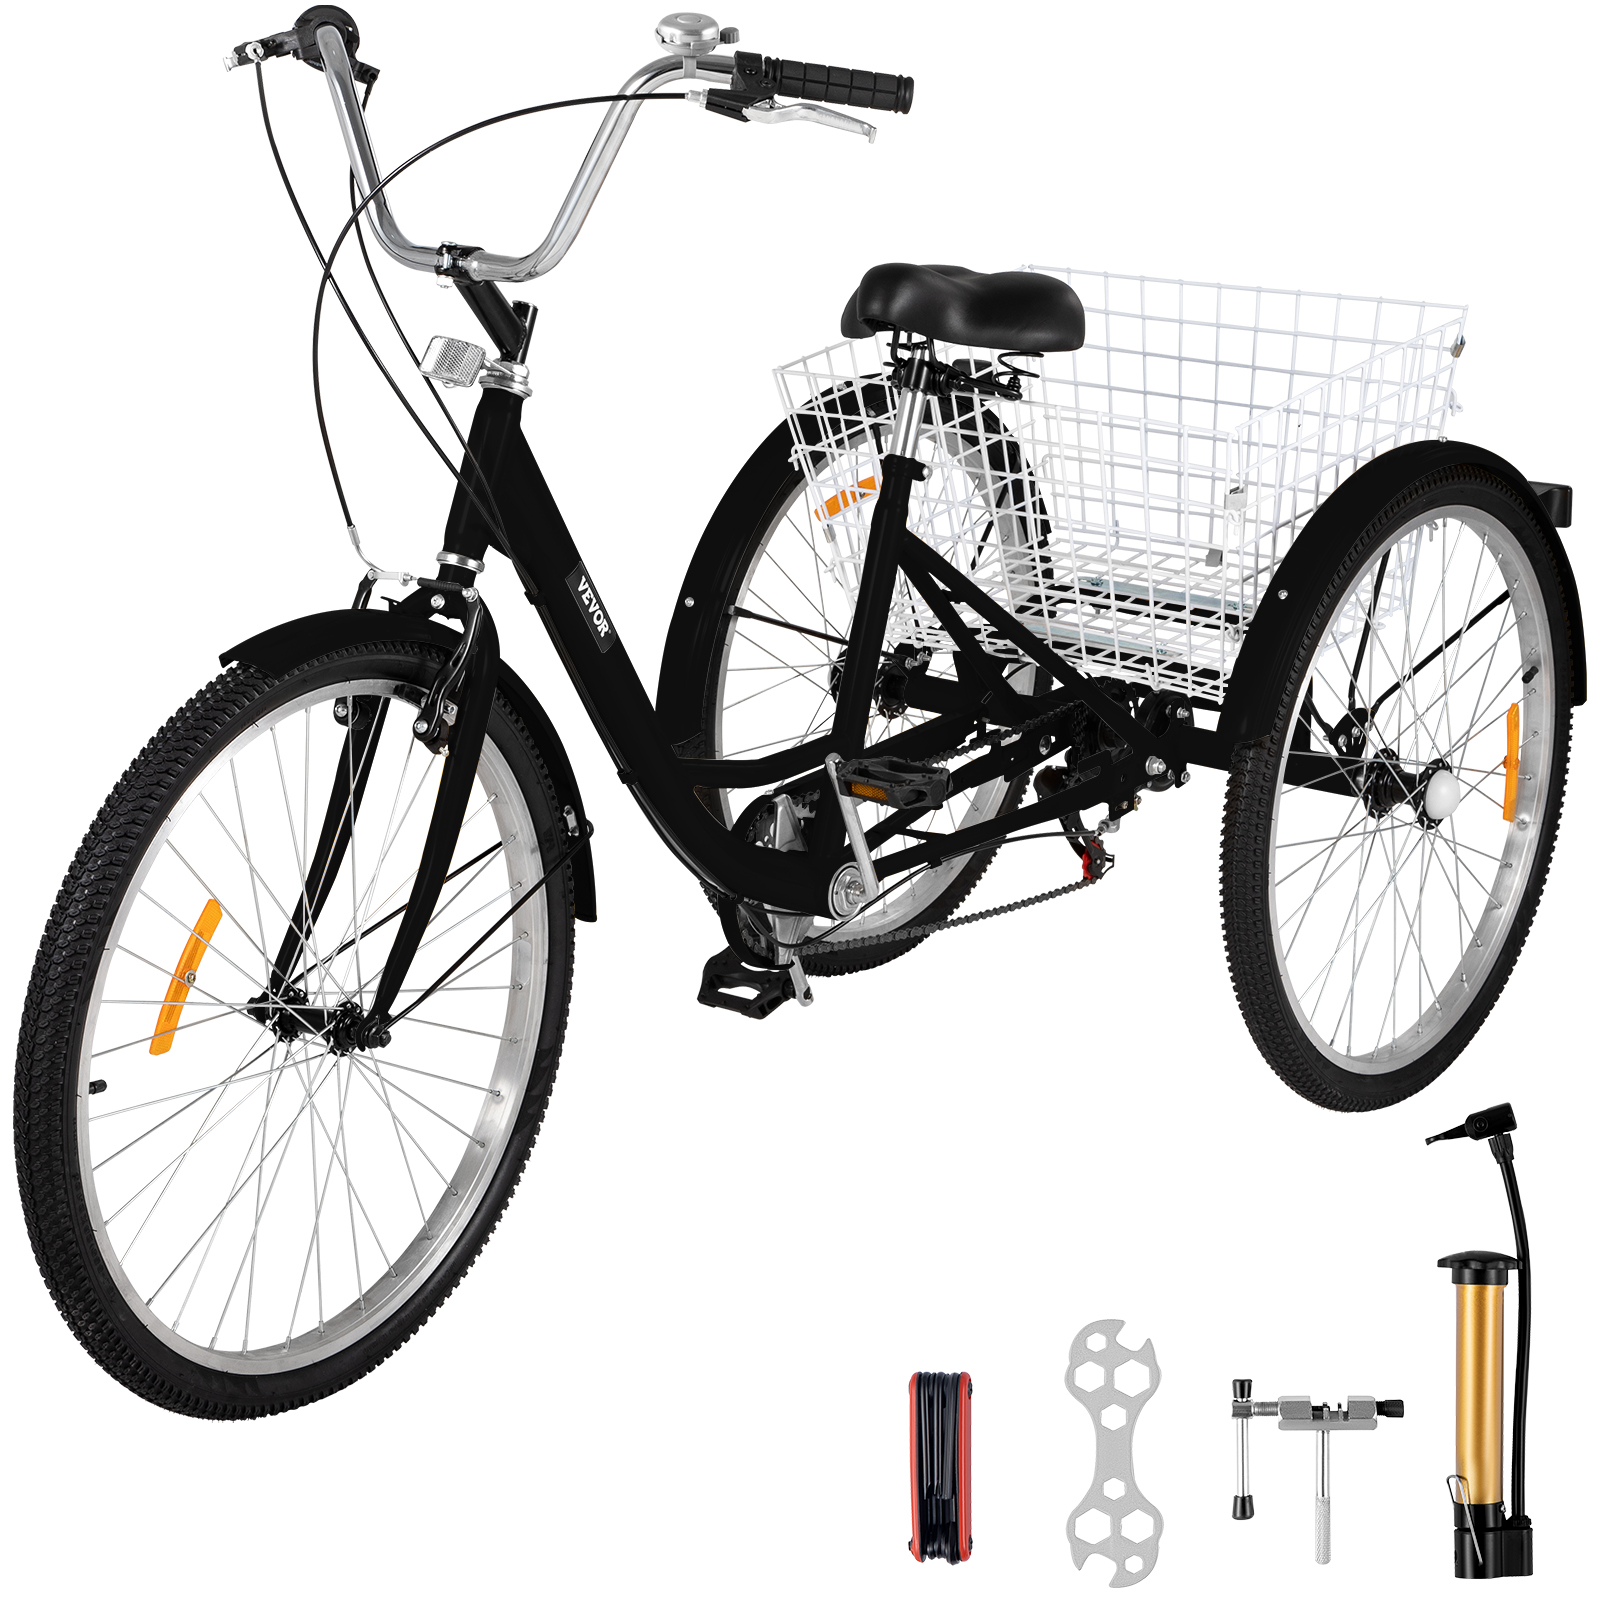 VEVOR 20" Adult Tricycle 3-Wheel 7 Speed Bicycle Trike Cruiser w/ Lock Basket от Vevor Many GEOs